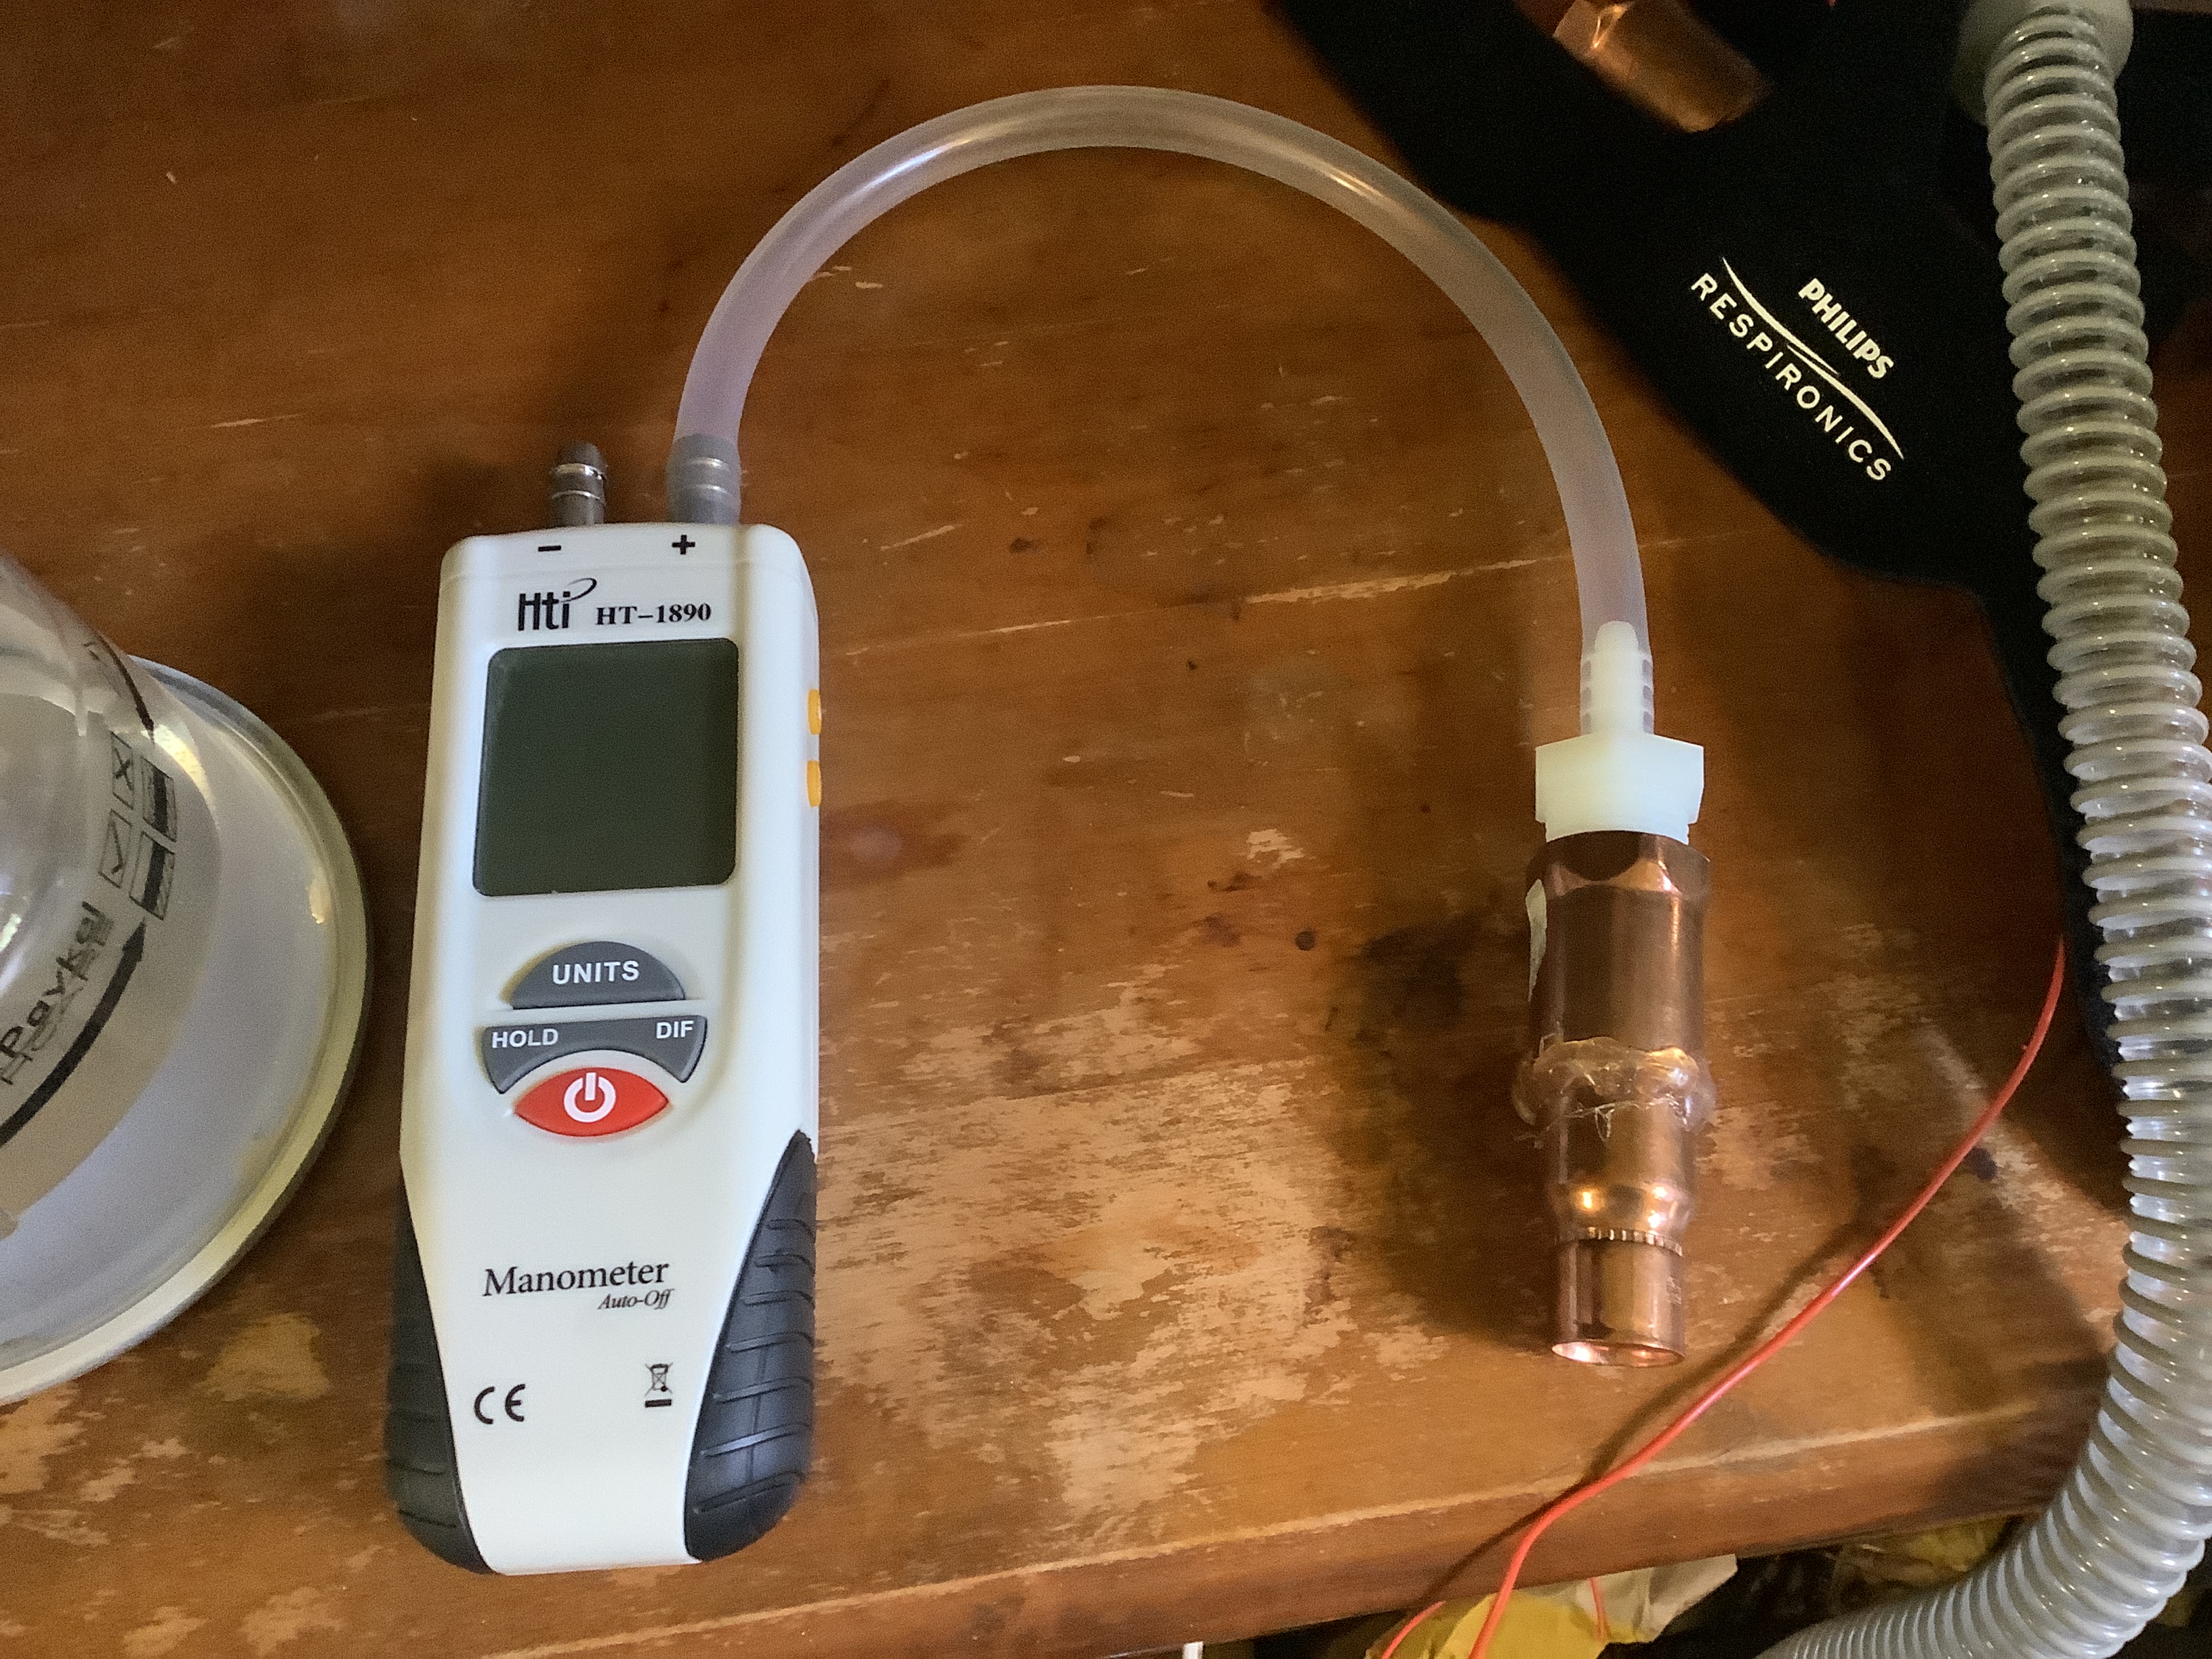 Manometer used to measure Air Pressure (cmH2O) at 0 CFPM of airflow